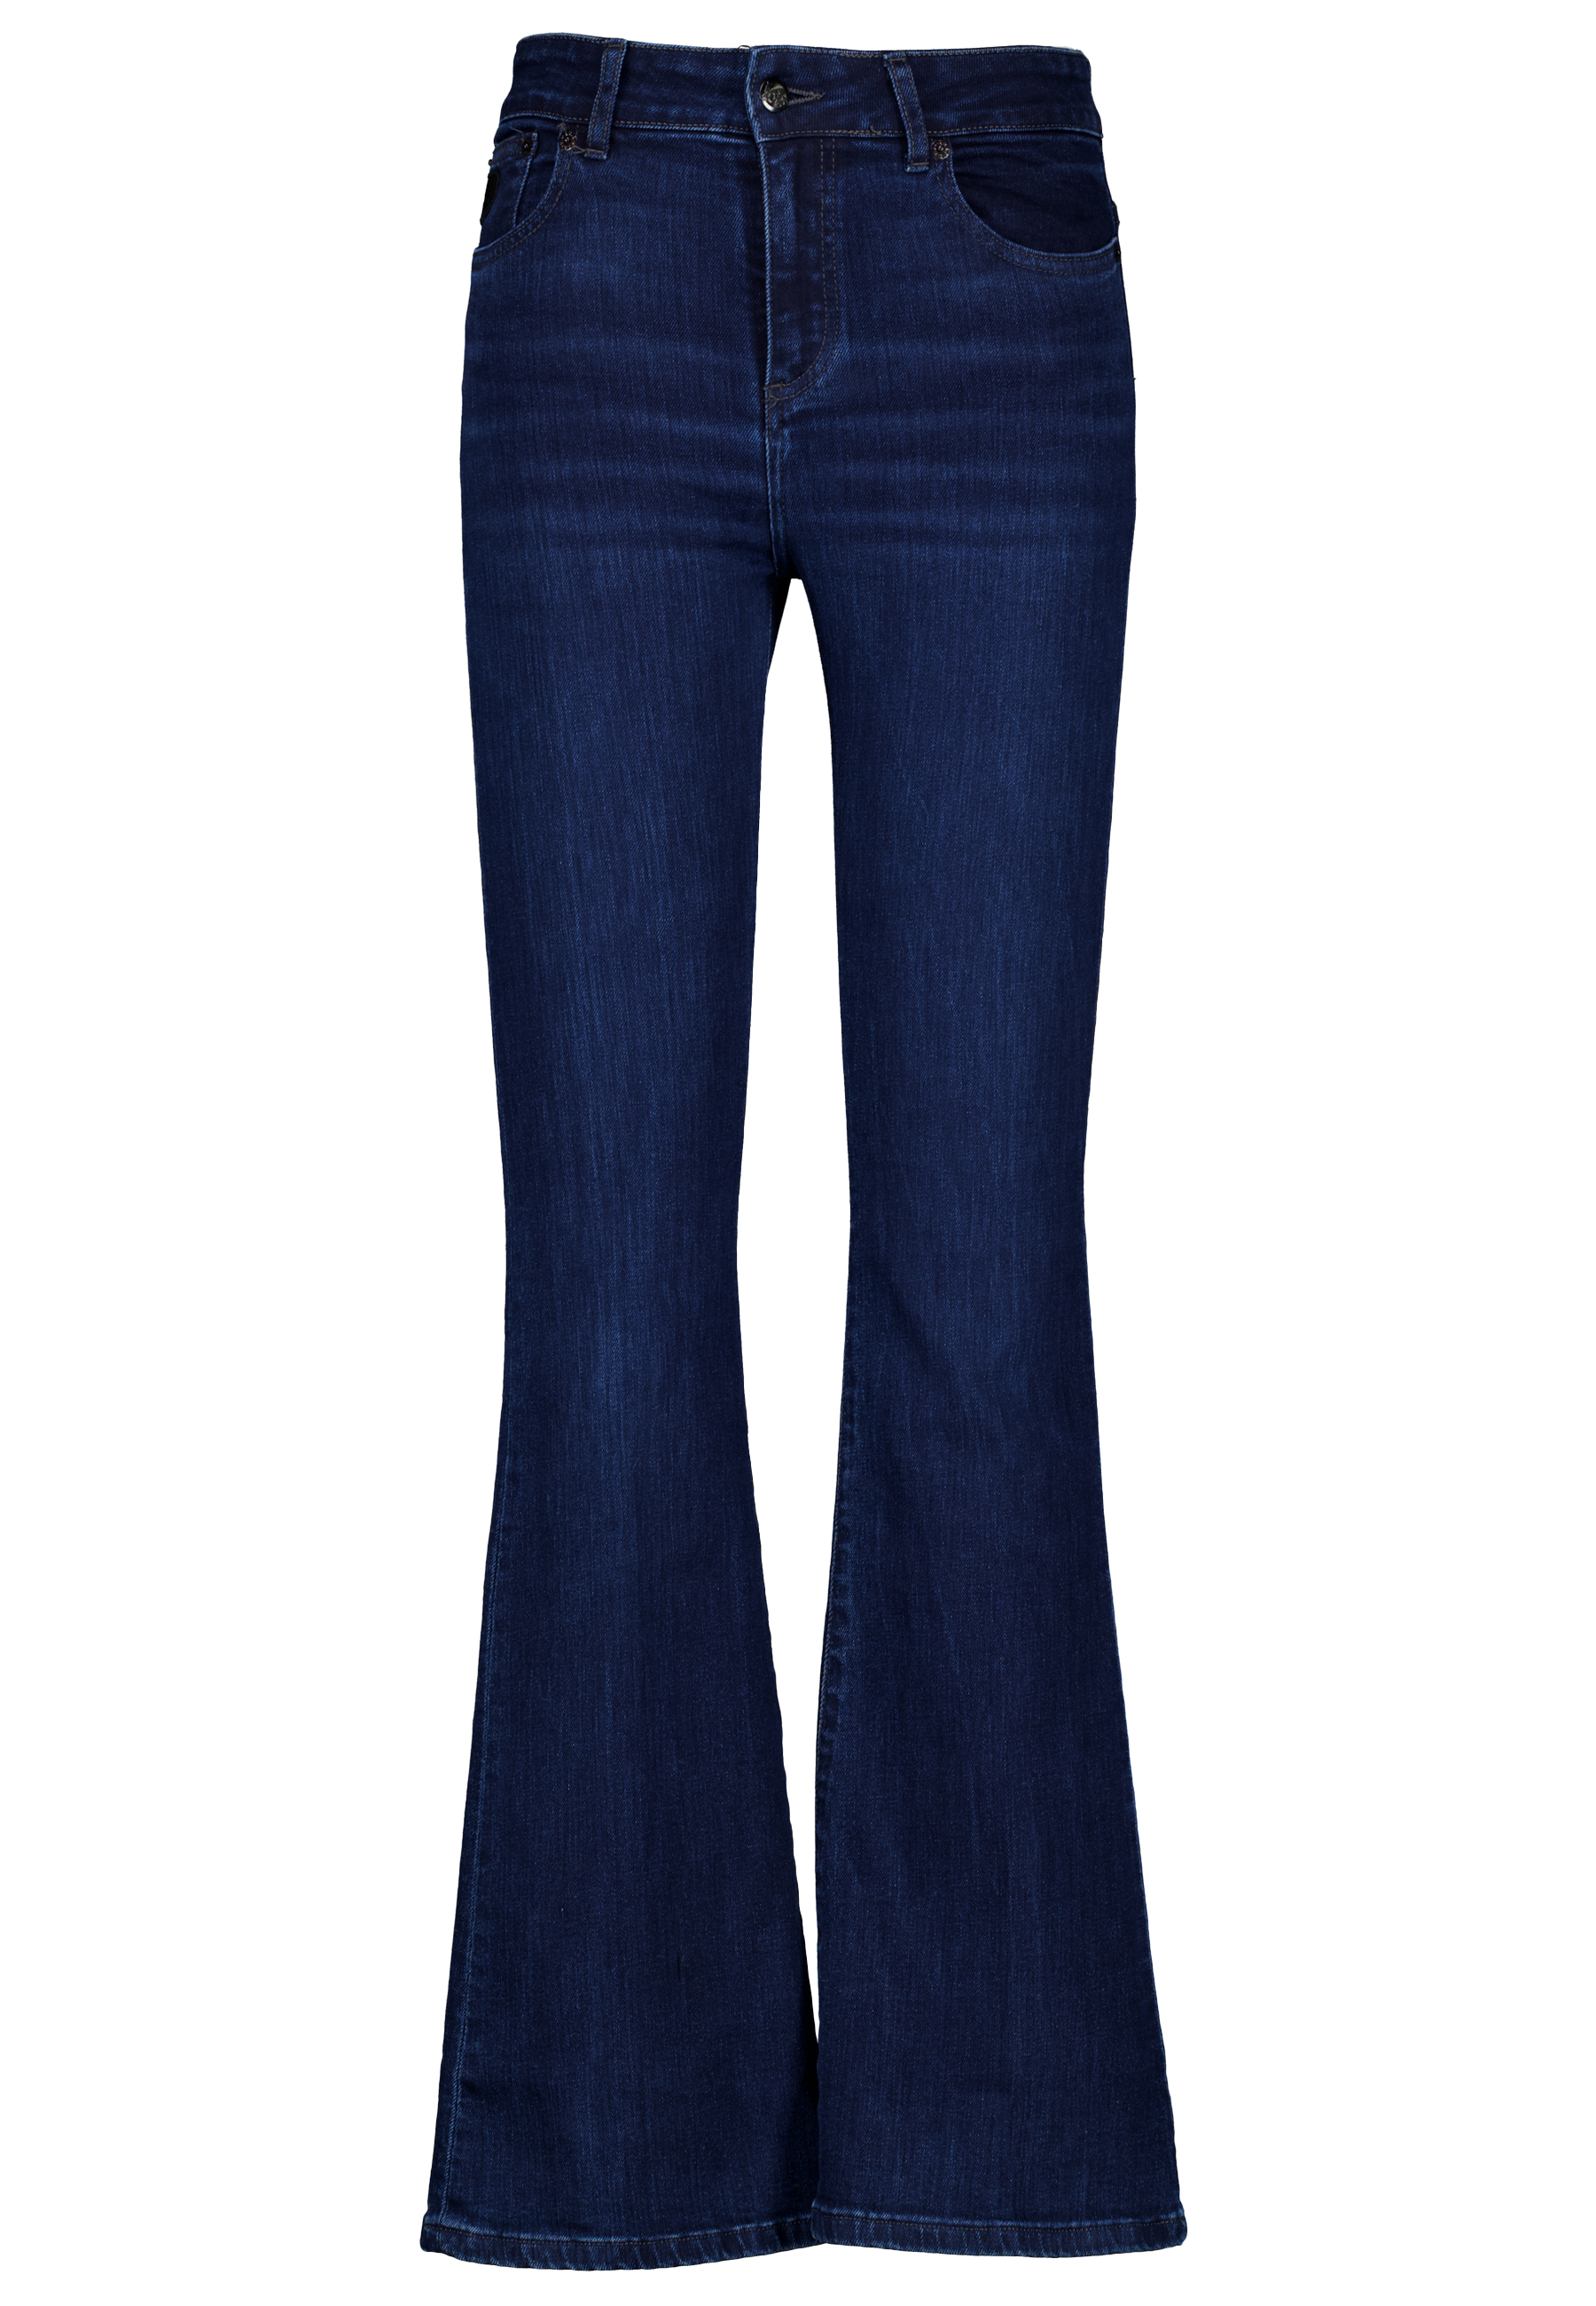 Lois jeans blauw Dames maat 28/34